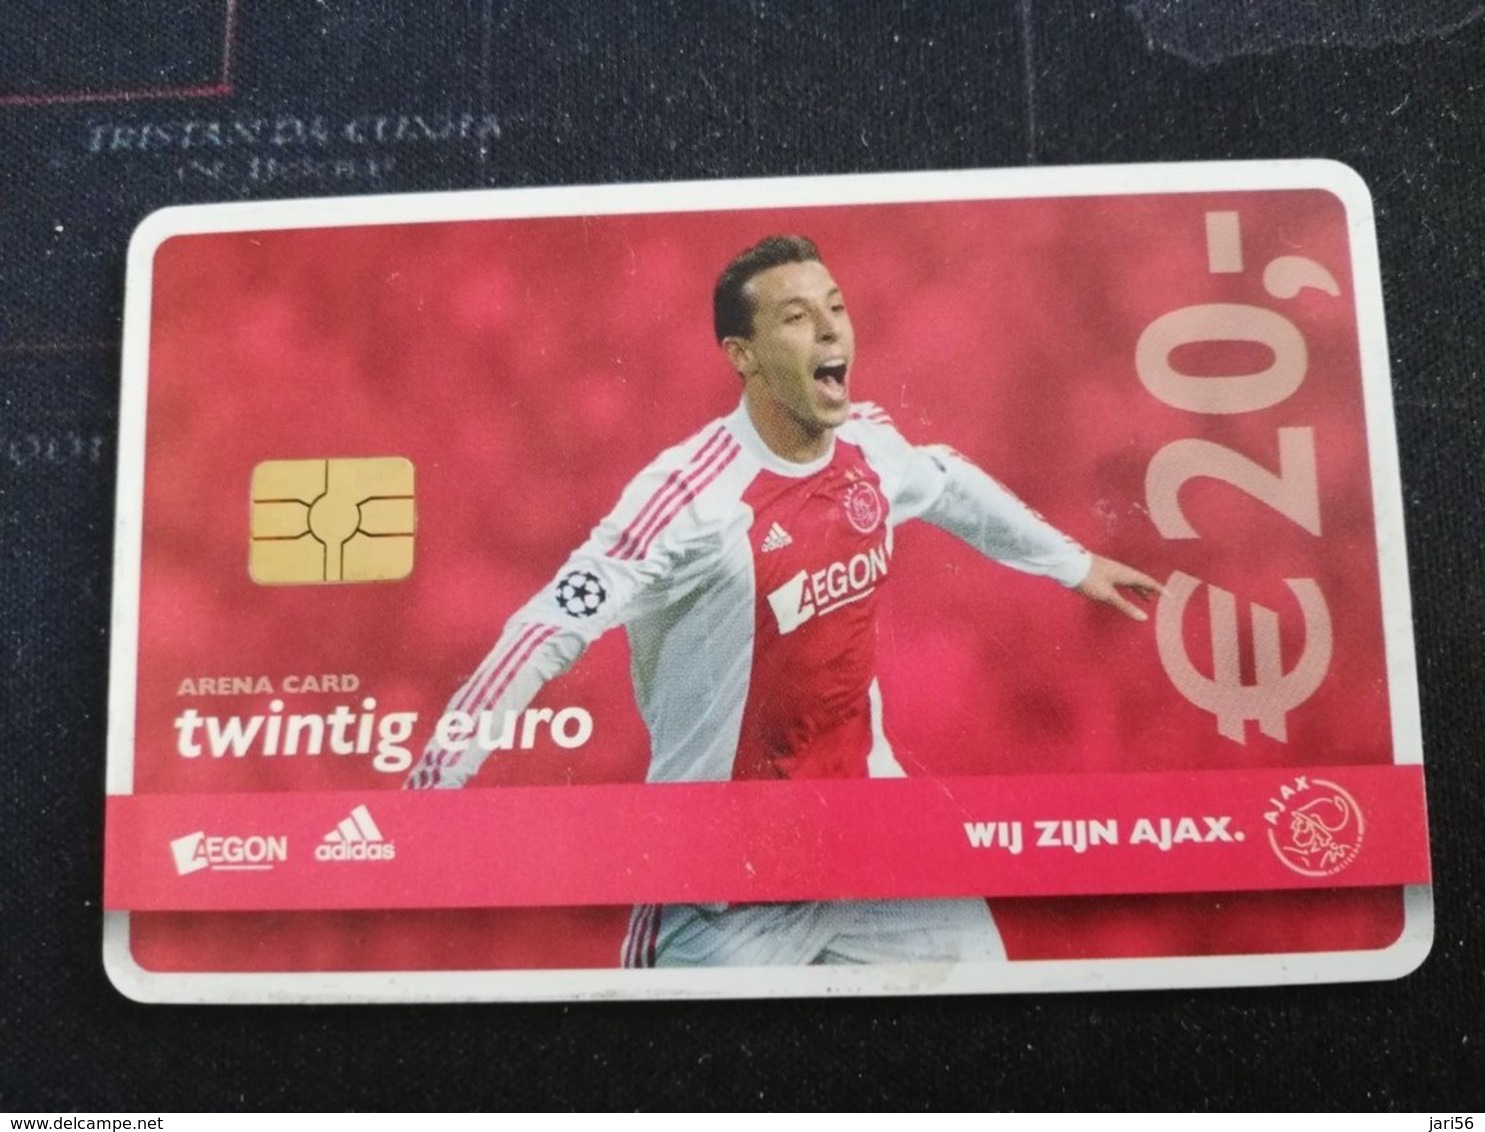 NETHERLANDS  ARENA CARD FOOTBAL/SOCCER  AJAX AMSTERDAM ABDELAOUI  €20, USED CARD  ** 1420 ** - Public